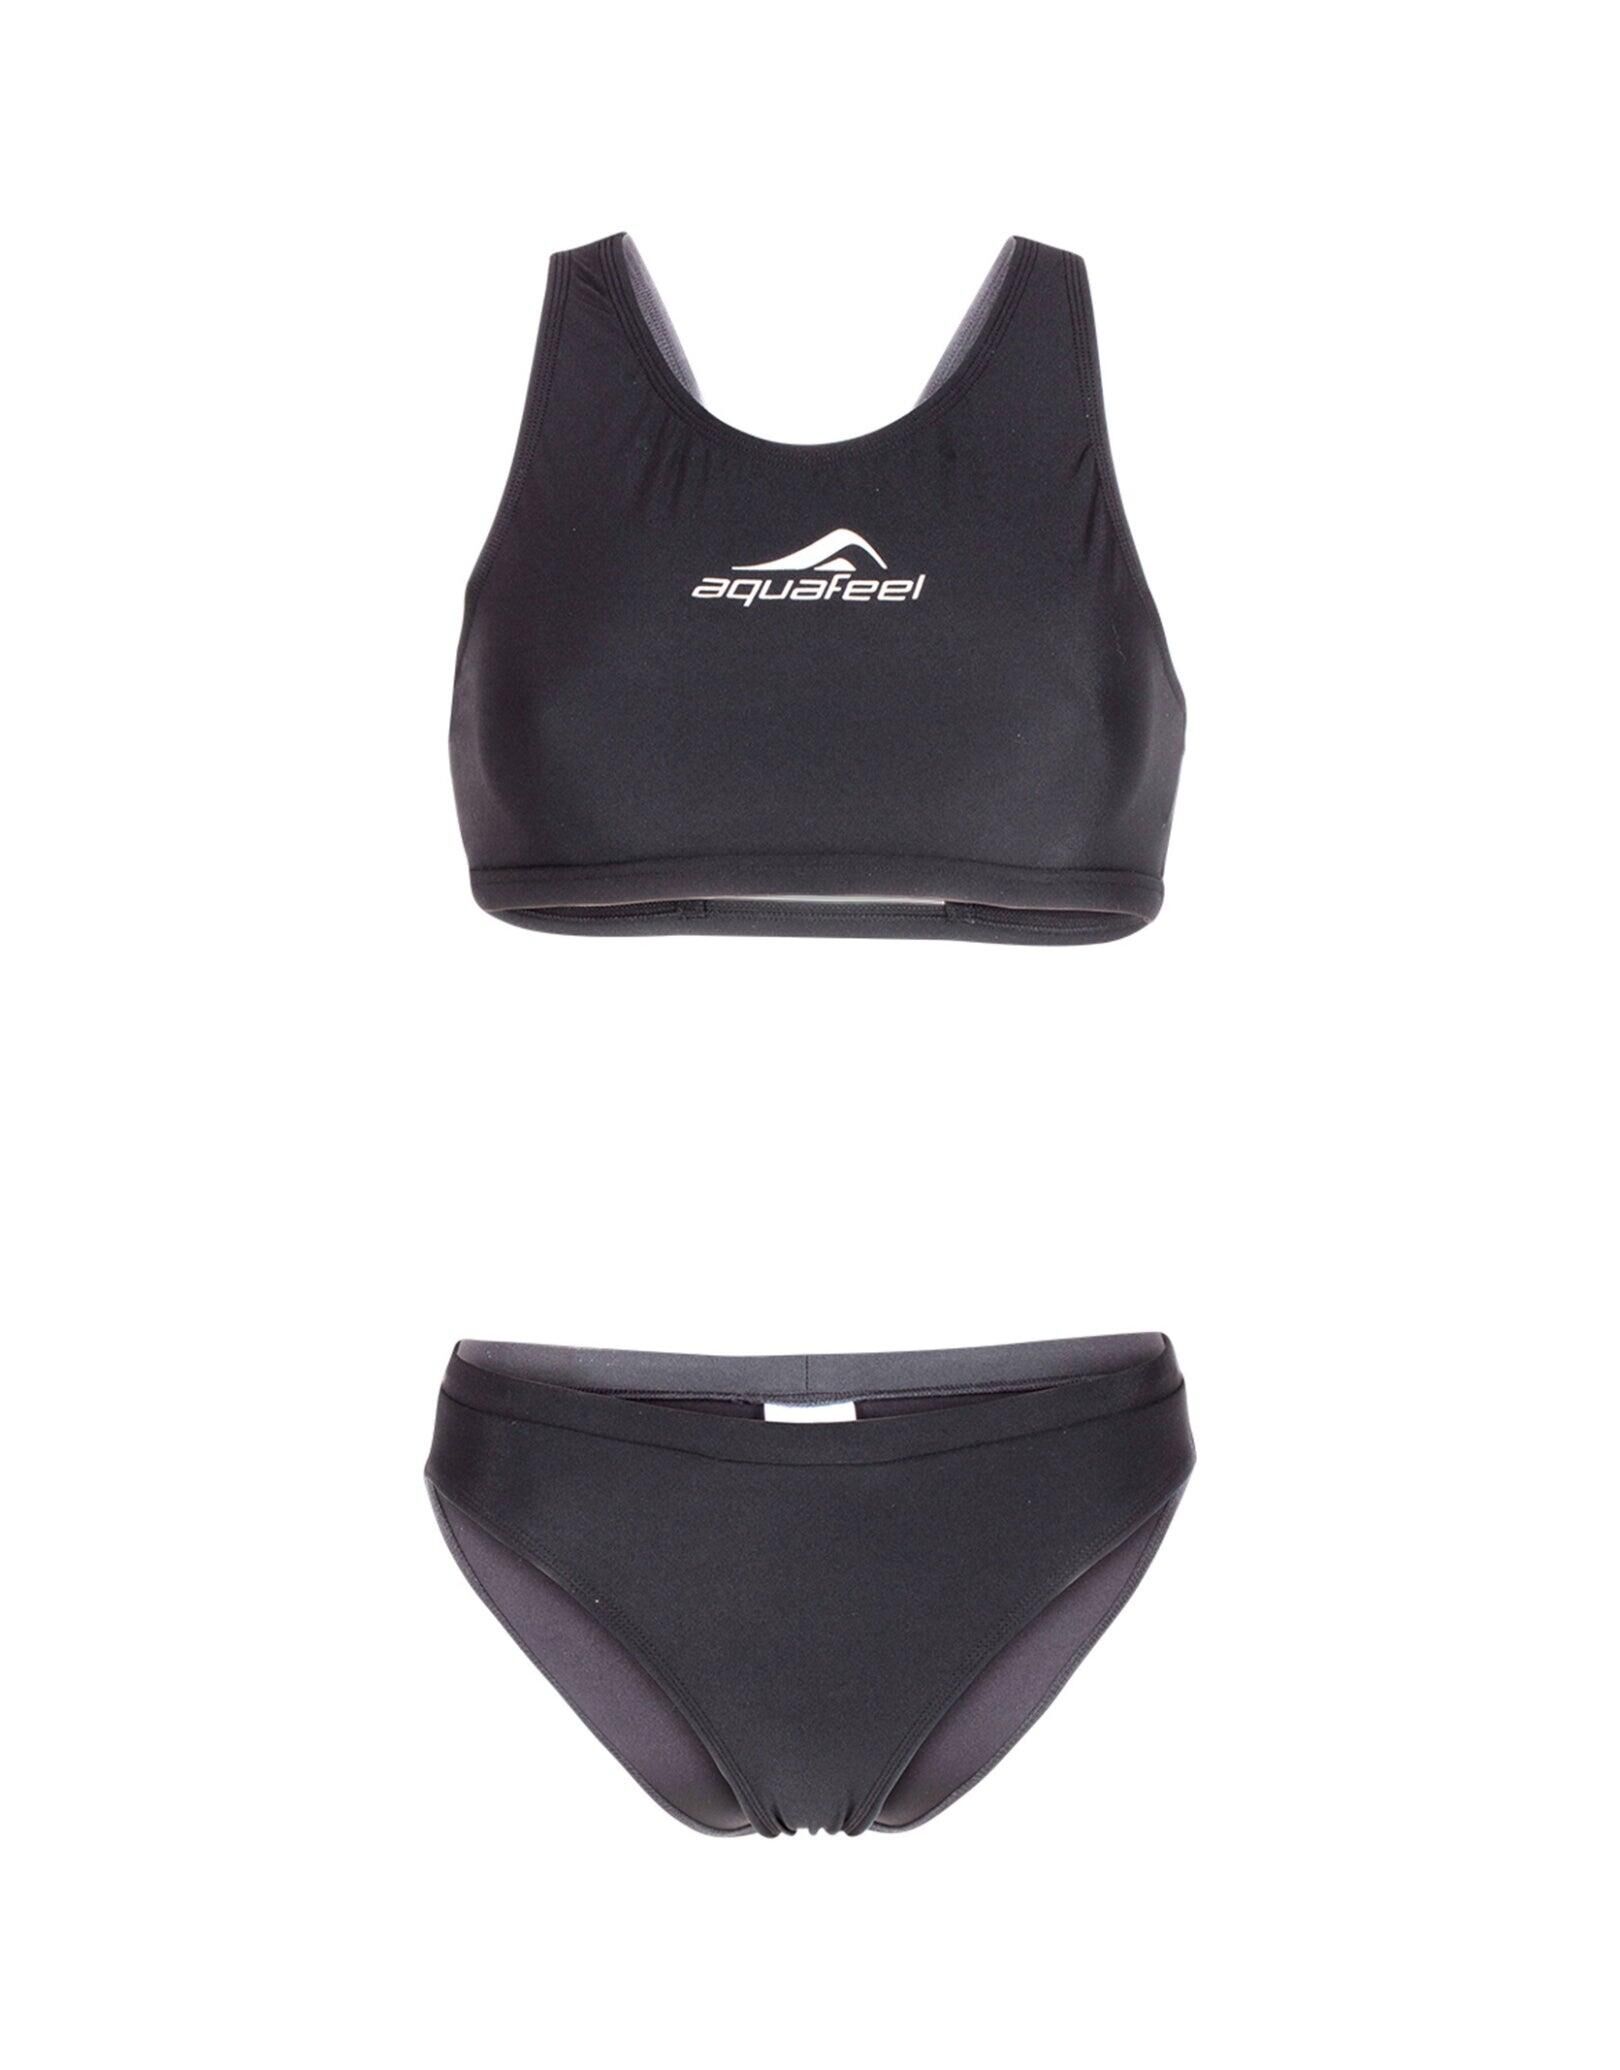 AQUAFEEL Aquafeel Racerback Bikini Set - Black